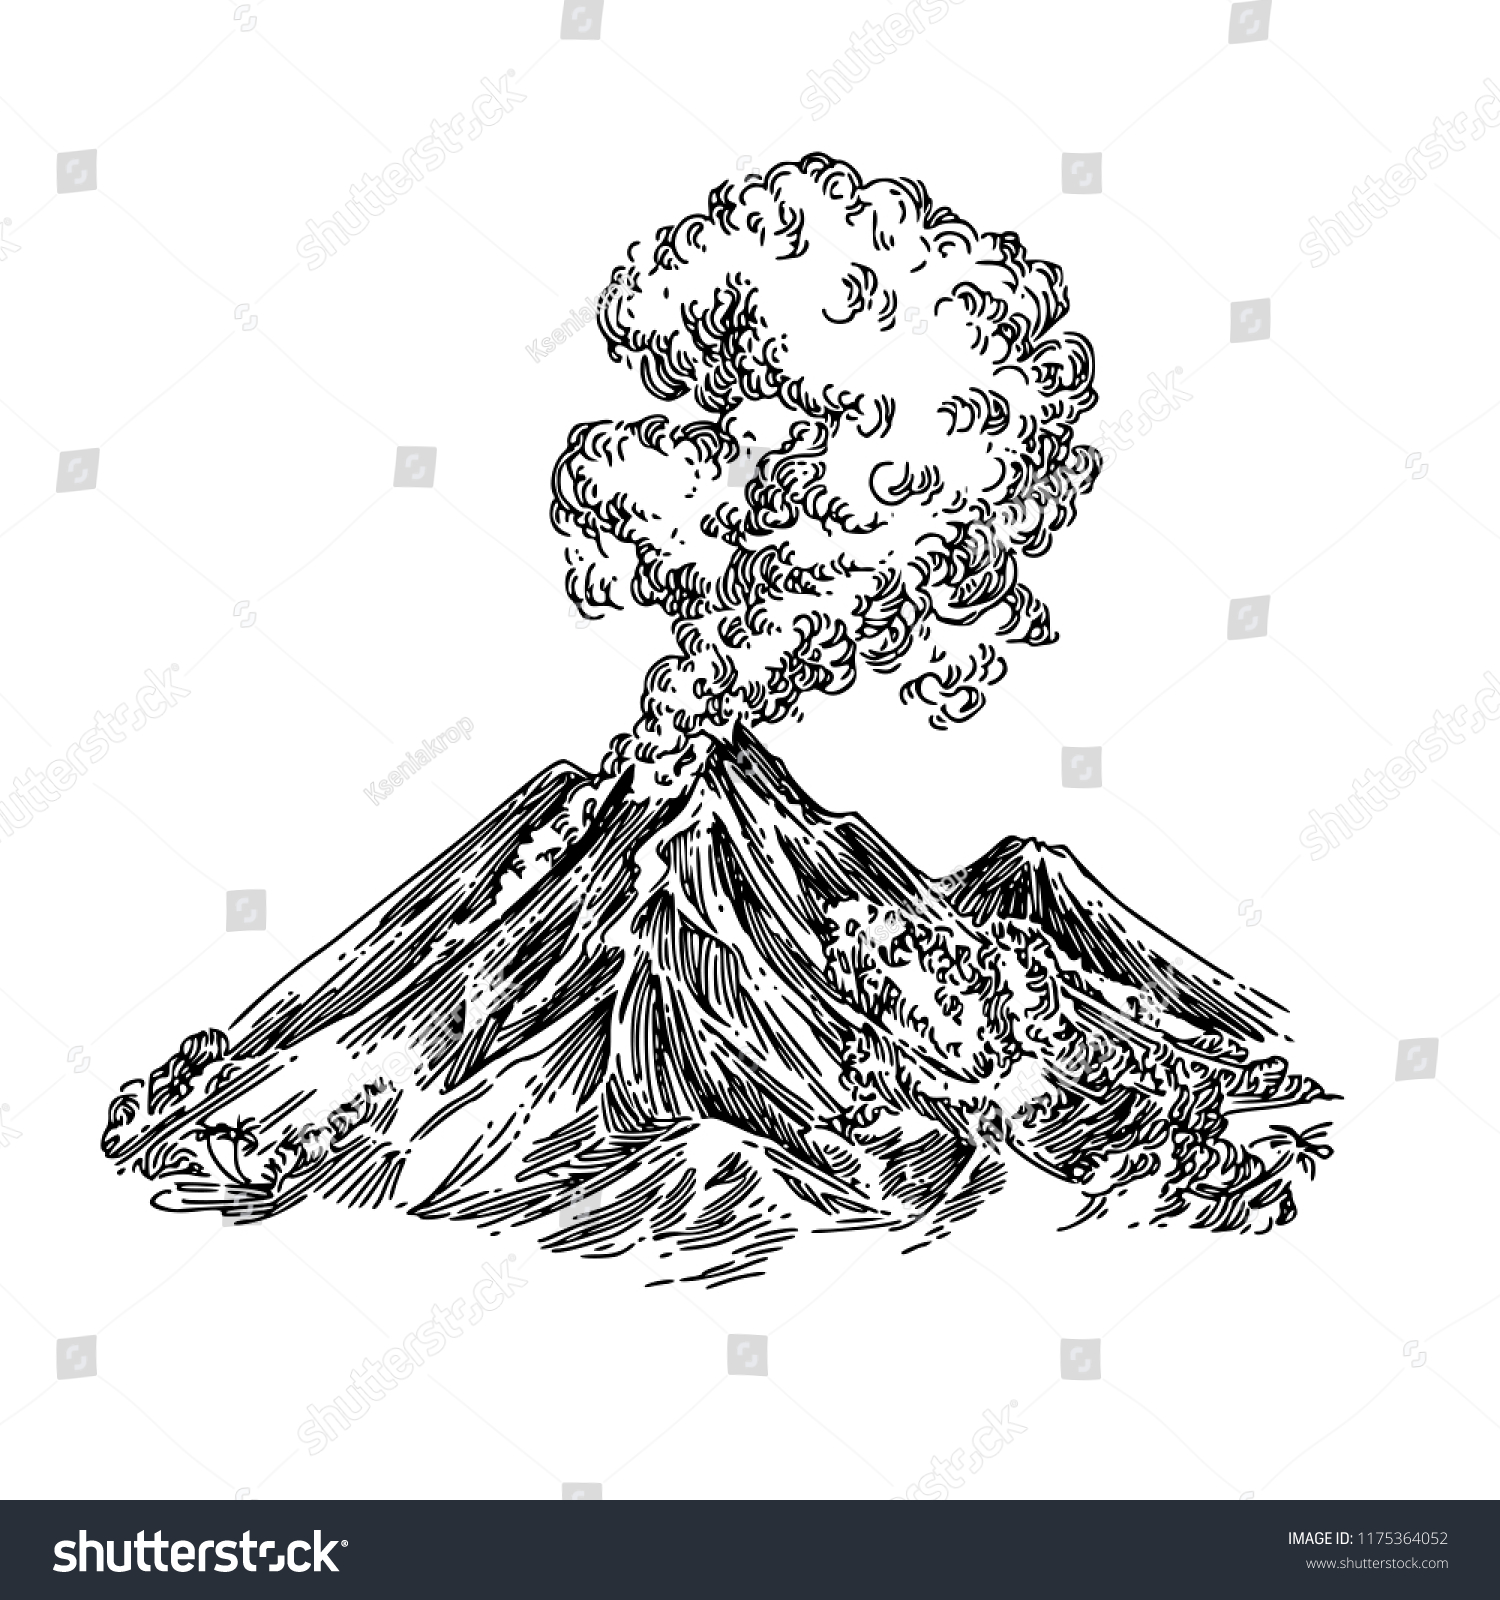 Eruption volcano. Sketch. Engraving style. Vector illustration. #1175364052